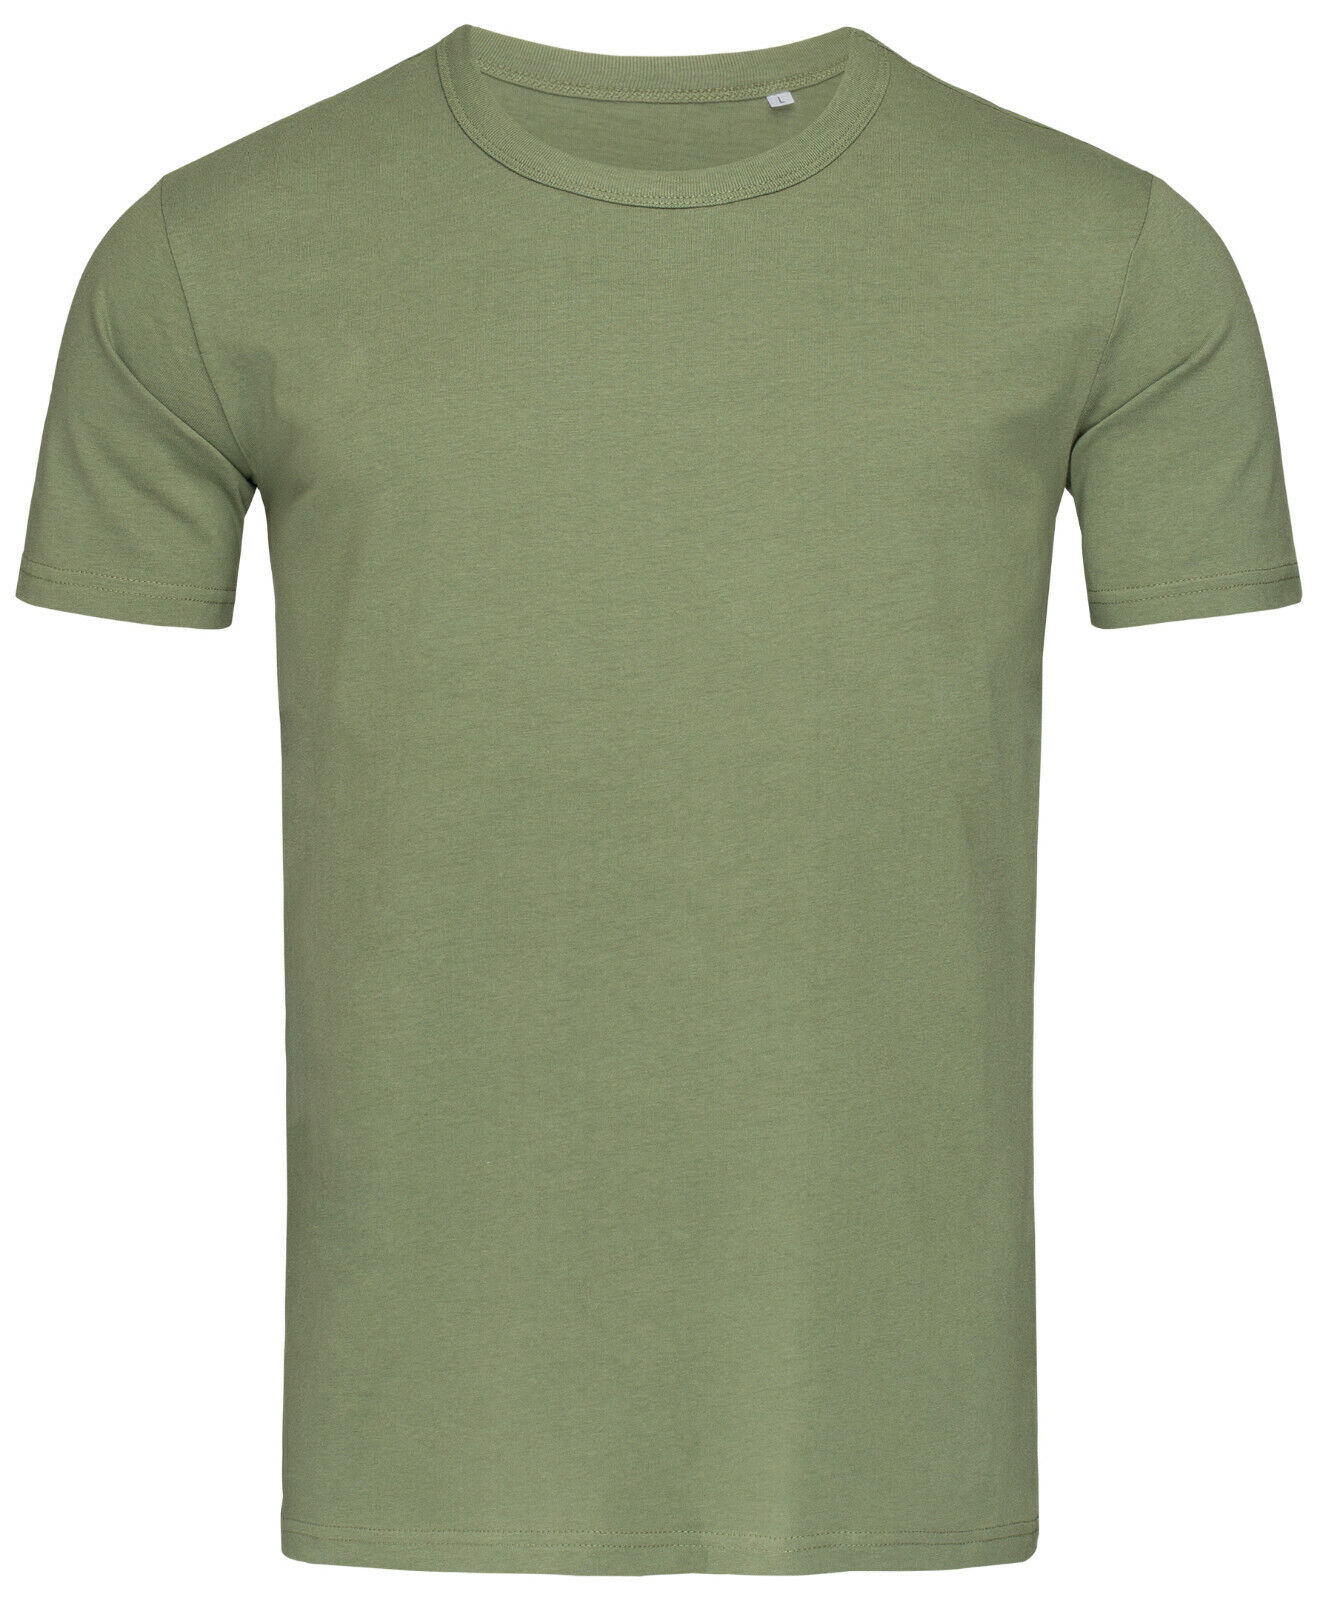 Plain Cotton Army Khaki Military Fatigue Green Slim Fit Fitted T-Shirt  S-Xxl | Ebay